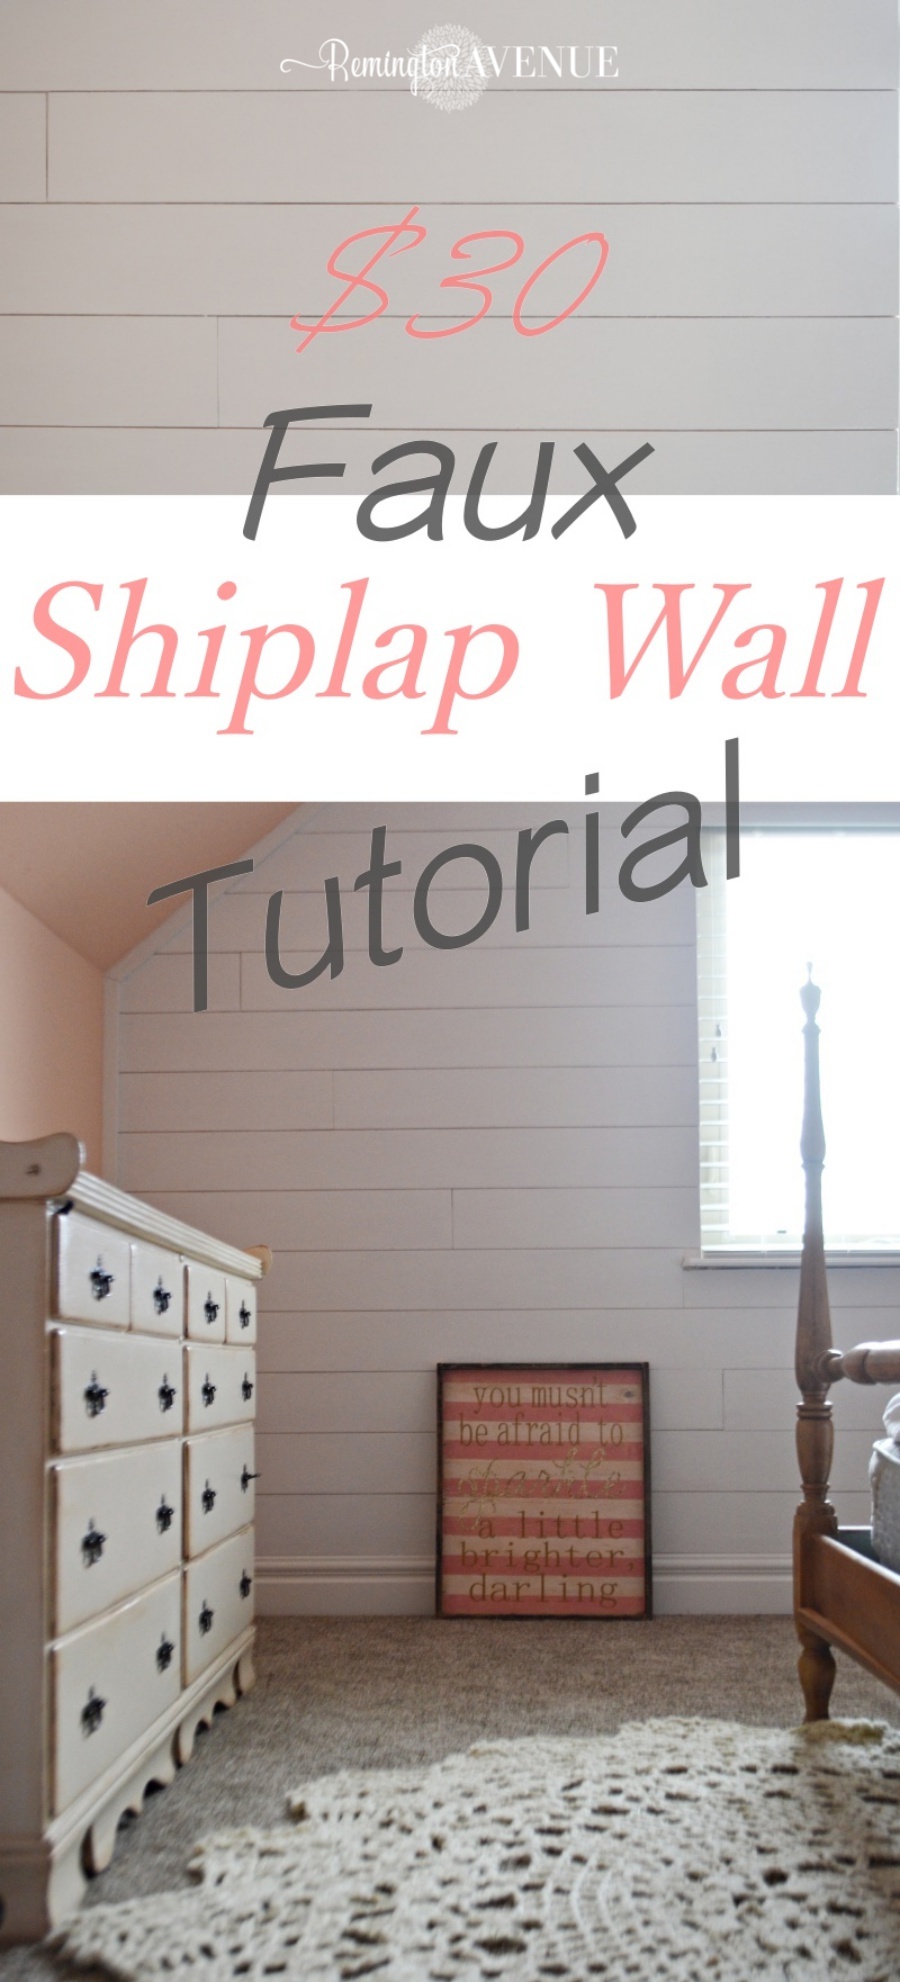 faux shiplap wall tutorial